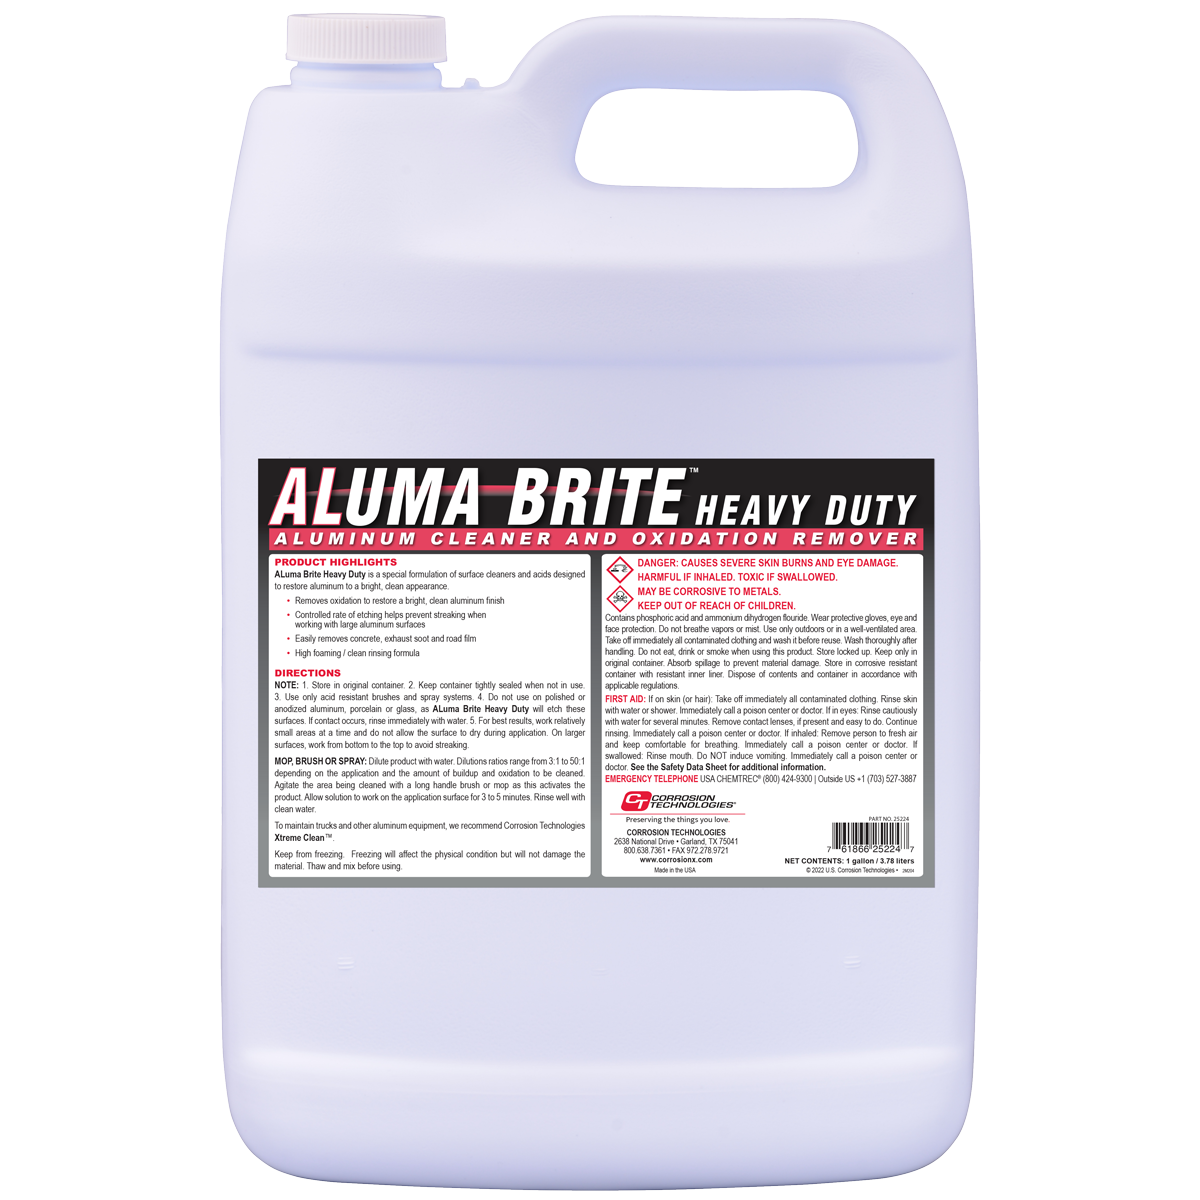 ALuma Brite Heavy Duty aluminum cleaner